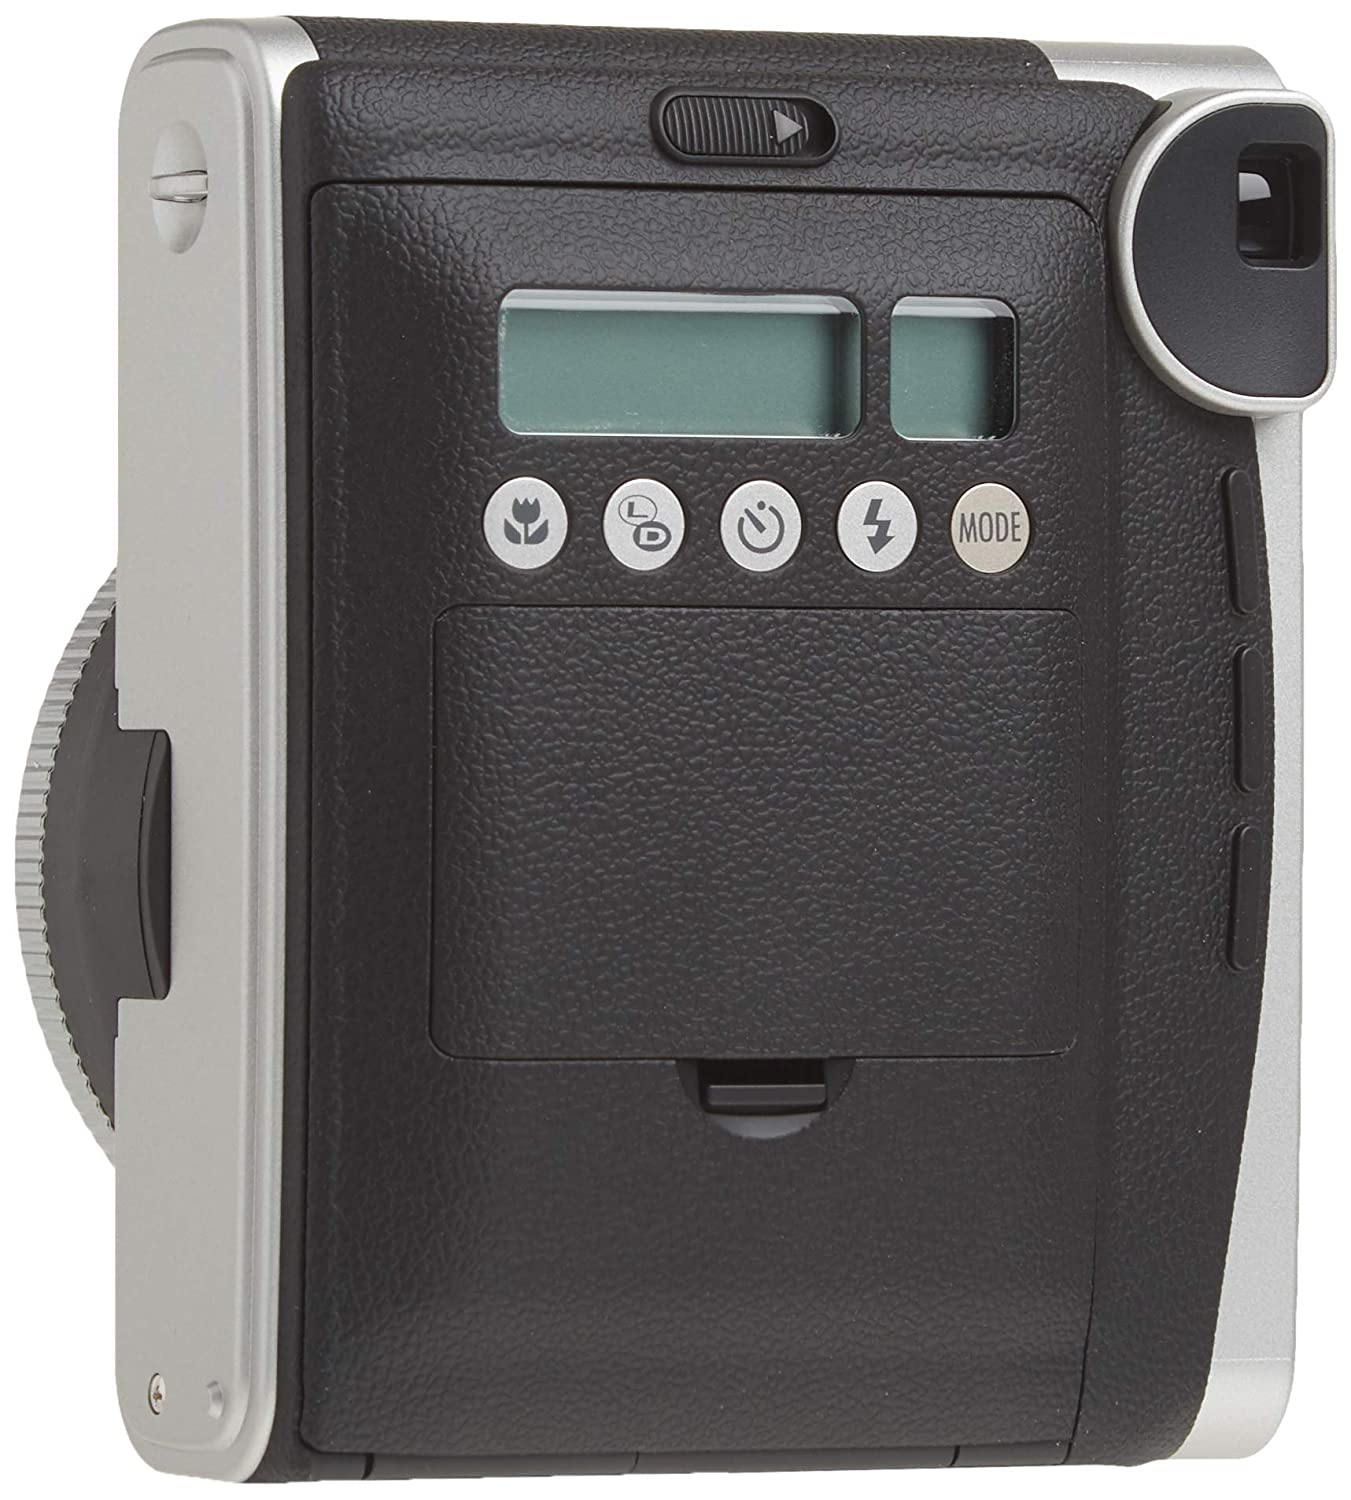 Fujifilm Instax Mini 90 Neo Classic Instant Film Camera